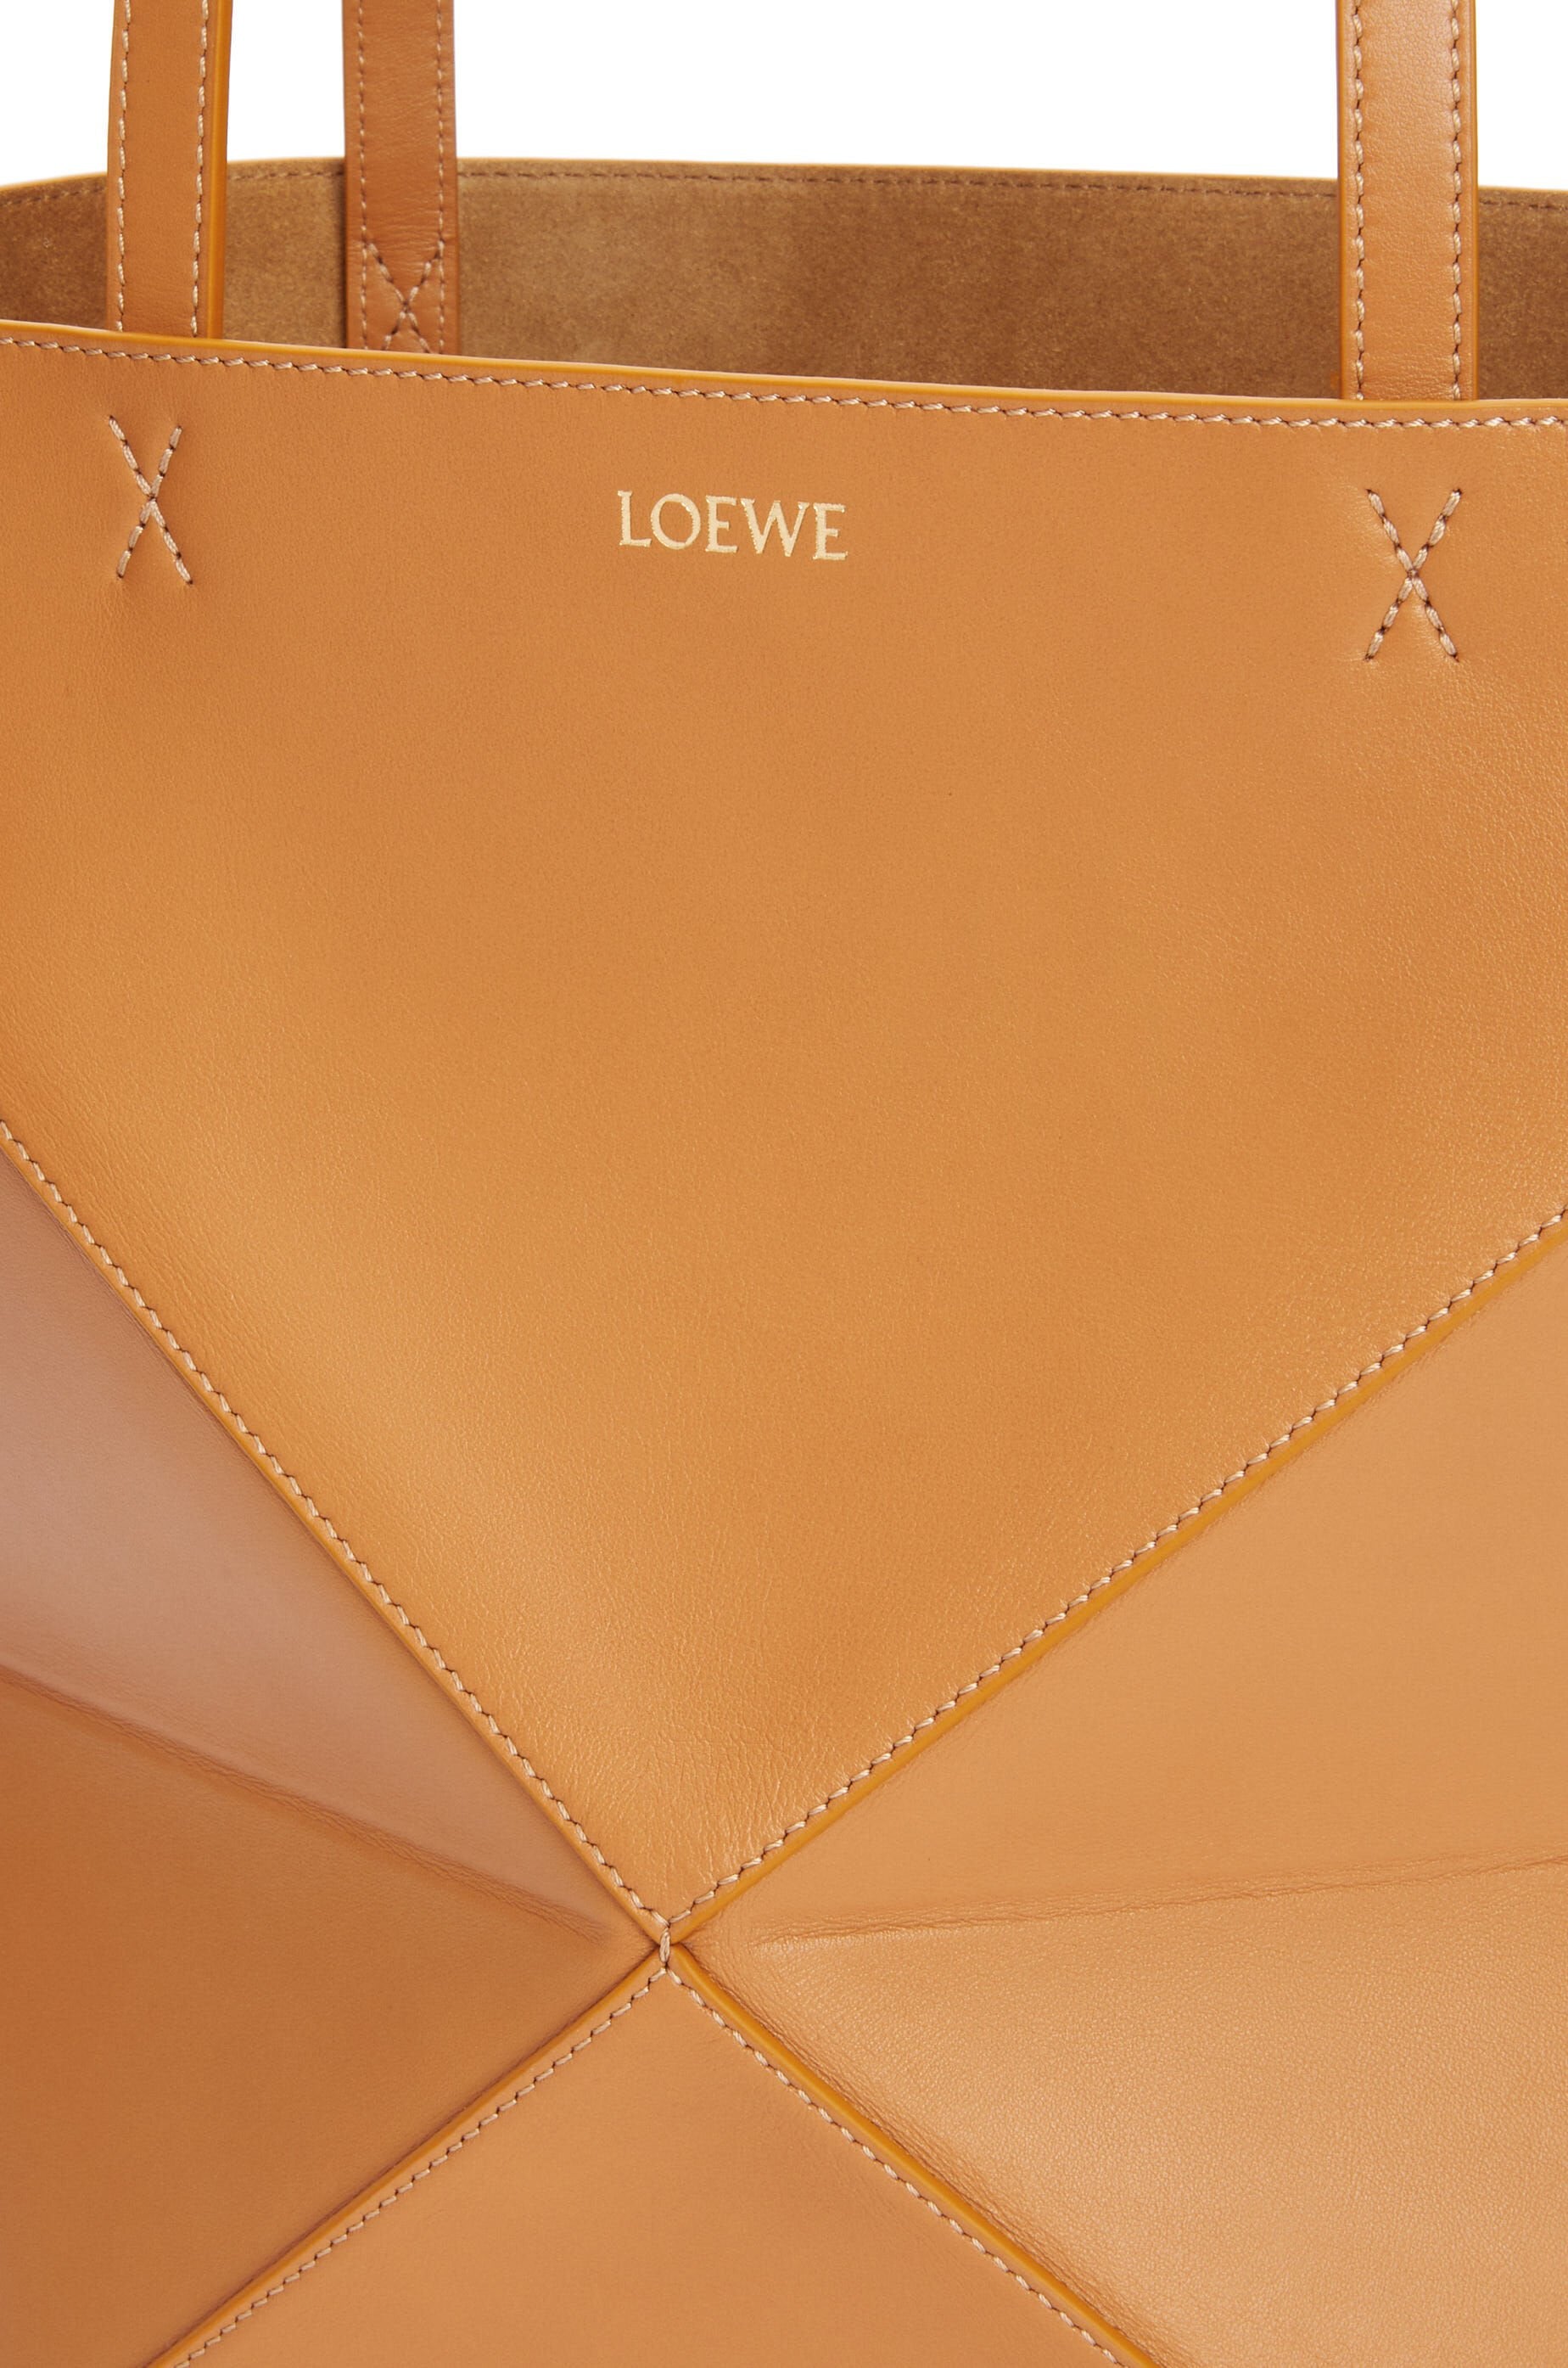 Loewe Medium Puzzle Fold Tote in shiny calfskin (Colour: Warm Desert)